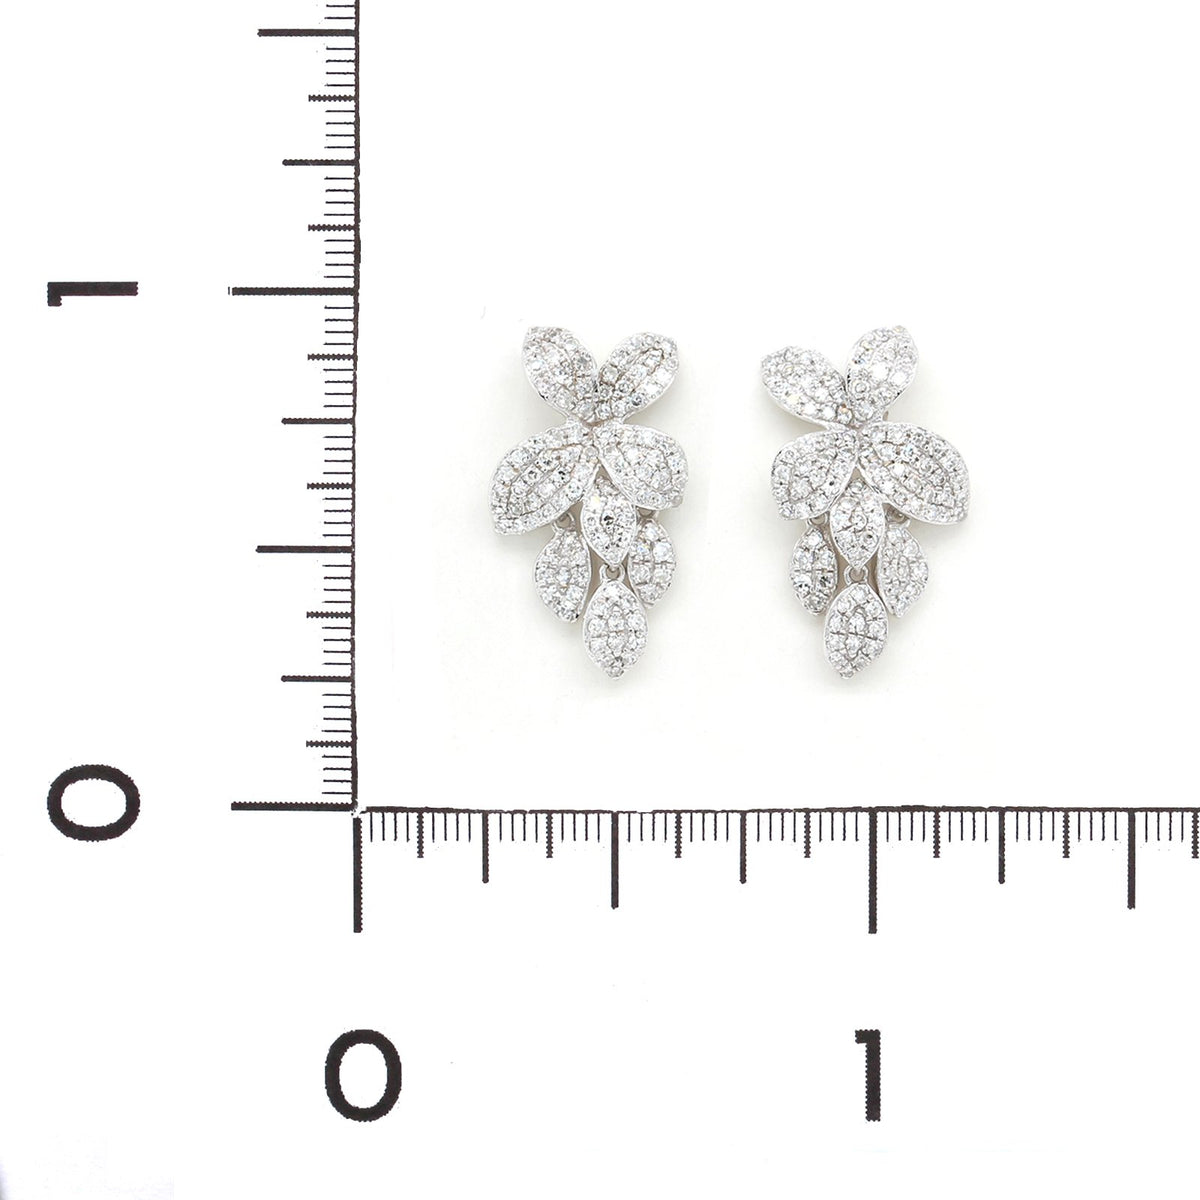 14K White Gold Flower Diamond Drop Earrings